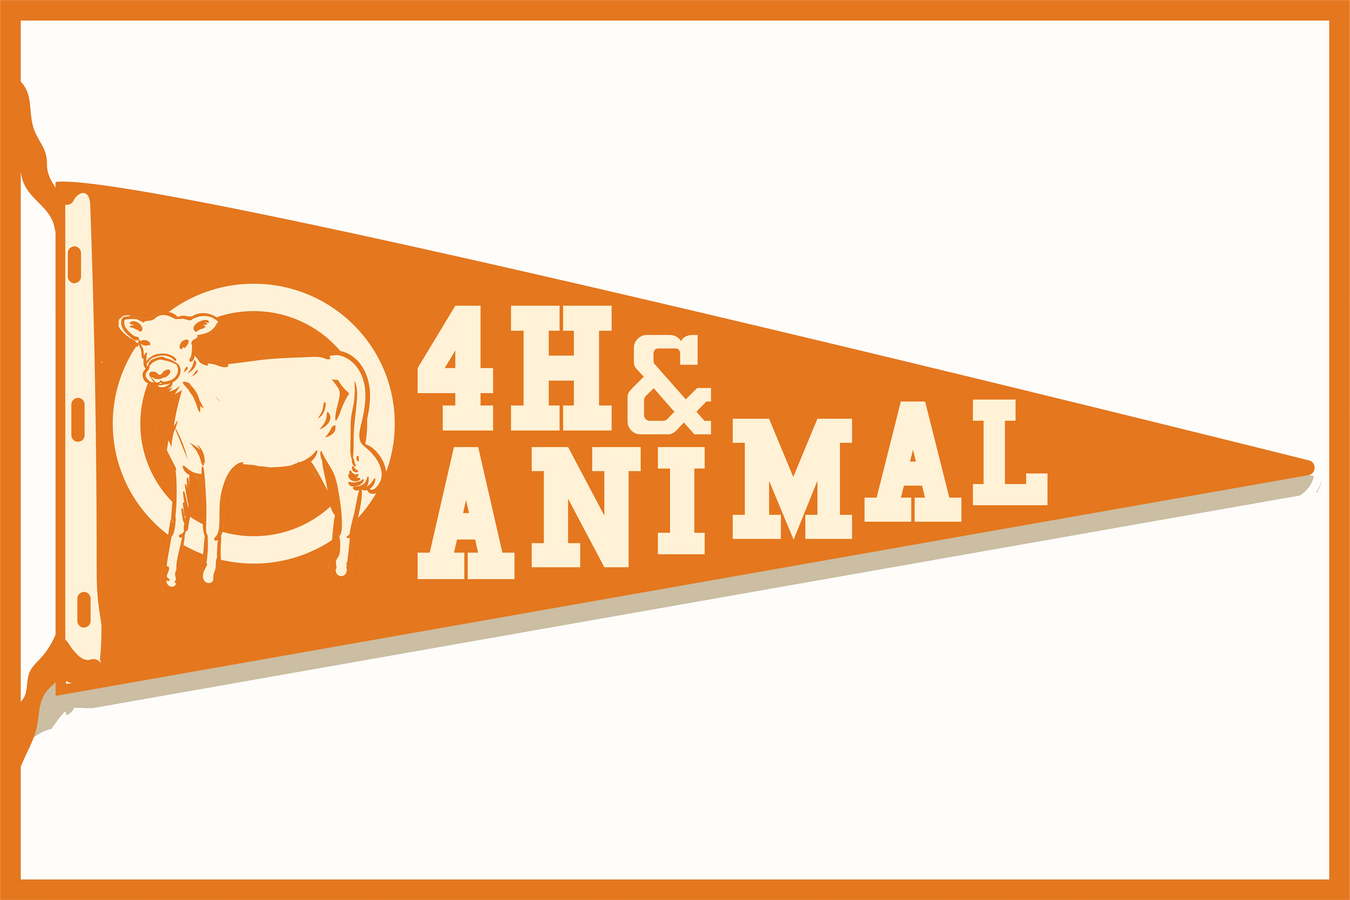 4H & Animals Trophies